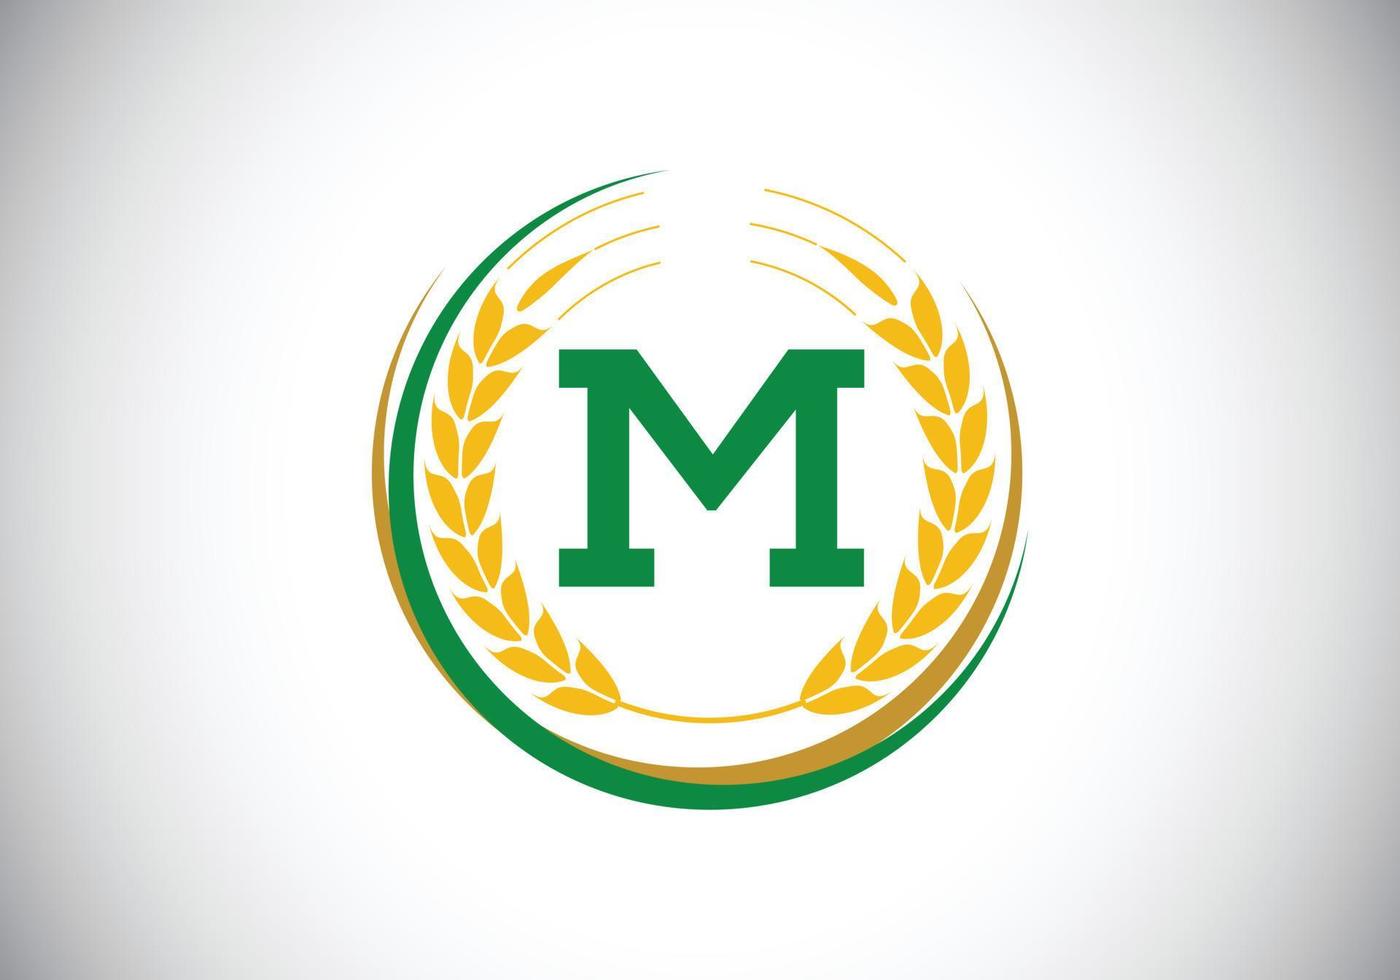 símbolo inicial de la letra m con corona de espigas de trigo. concepto de diseño de logotipo de cultivo de trigo orgánico. plantilla de vector de diseño de logotipo de agricultura.